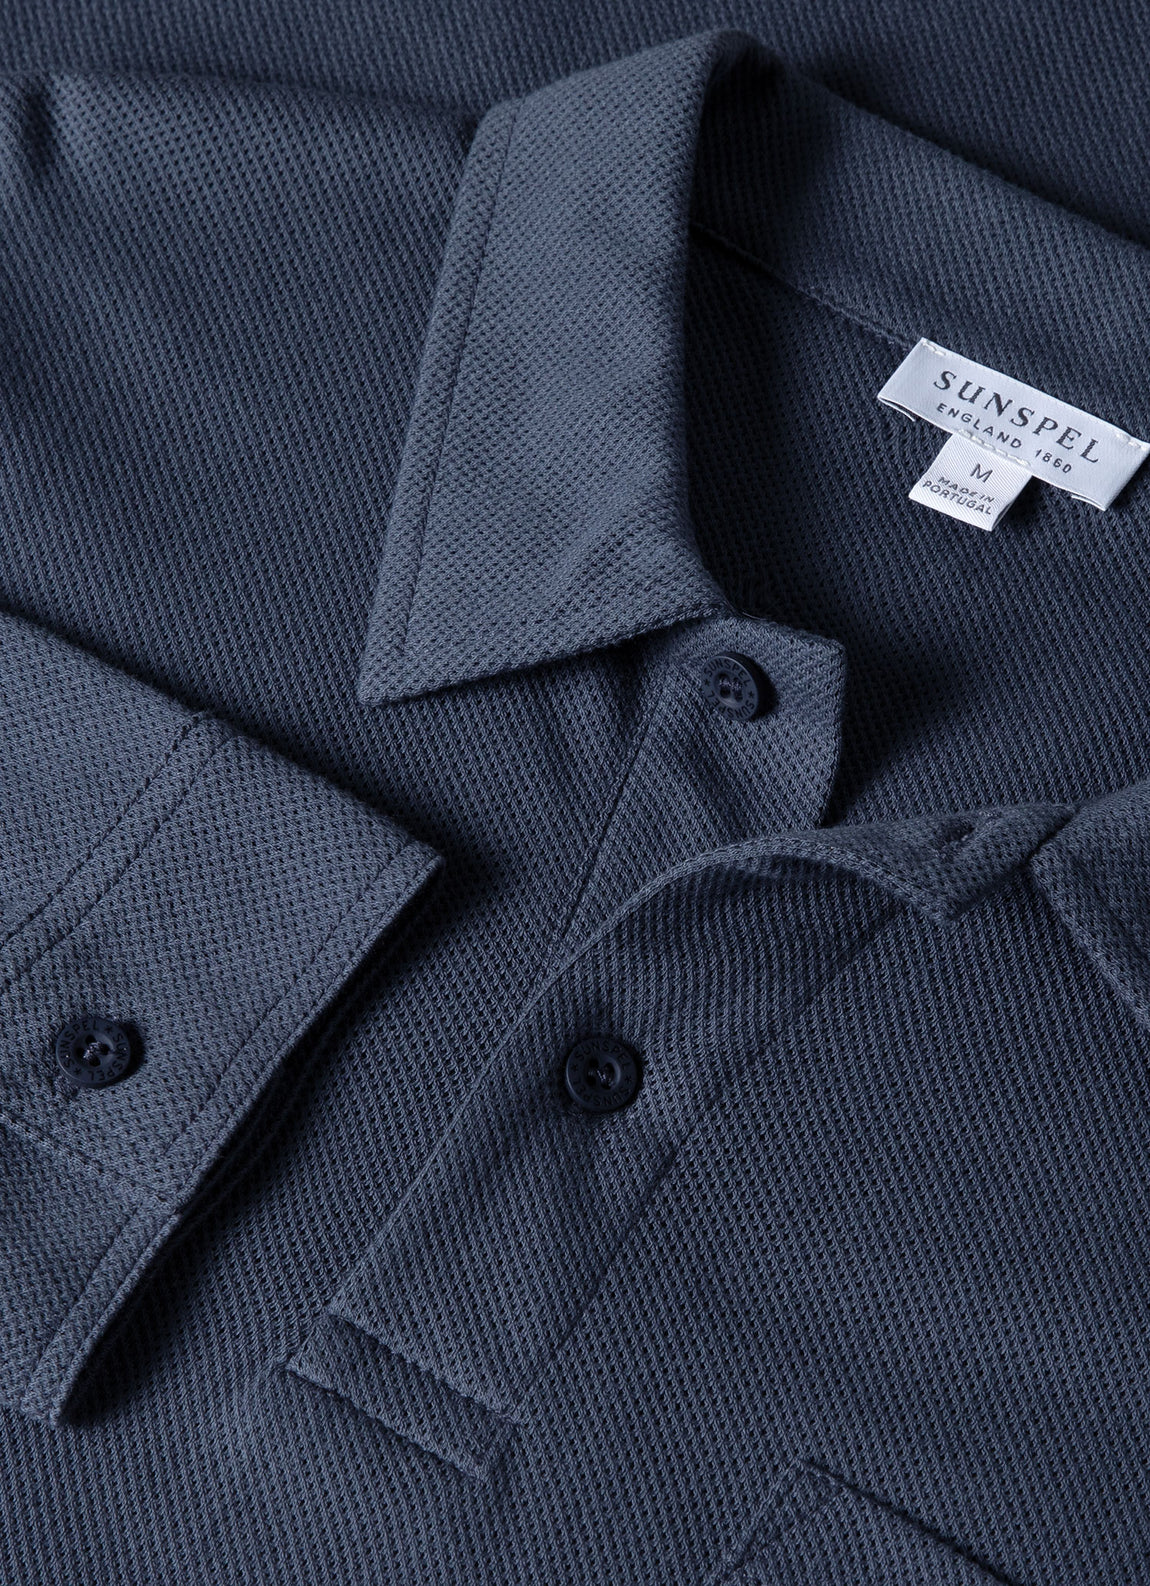 Men's Long Sleeve Riviera Polo Shirt in Slate Blue